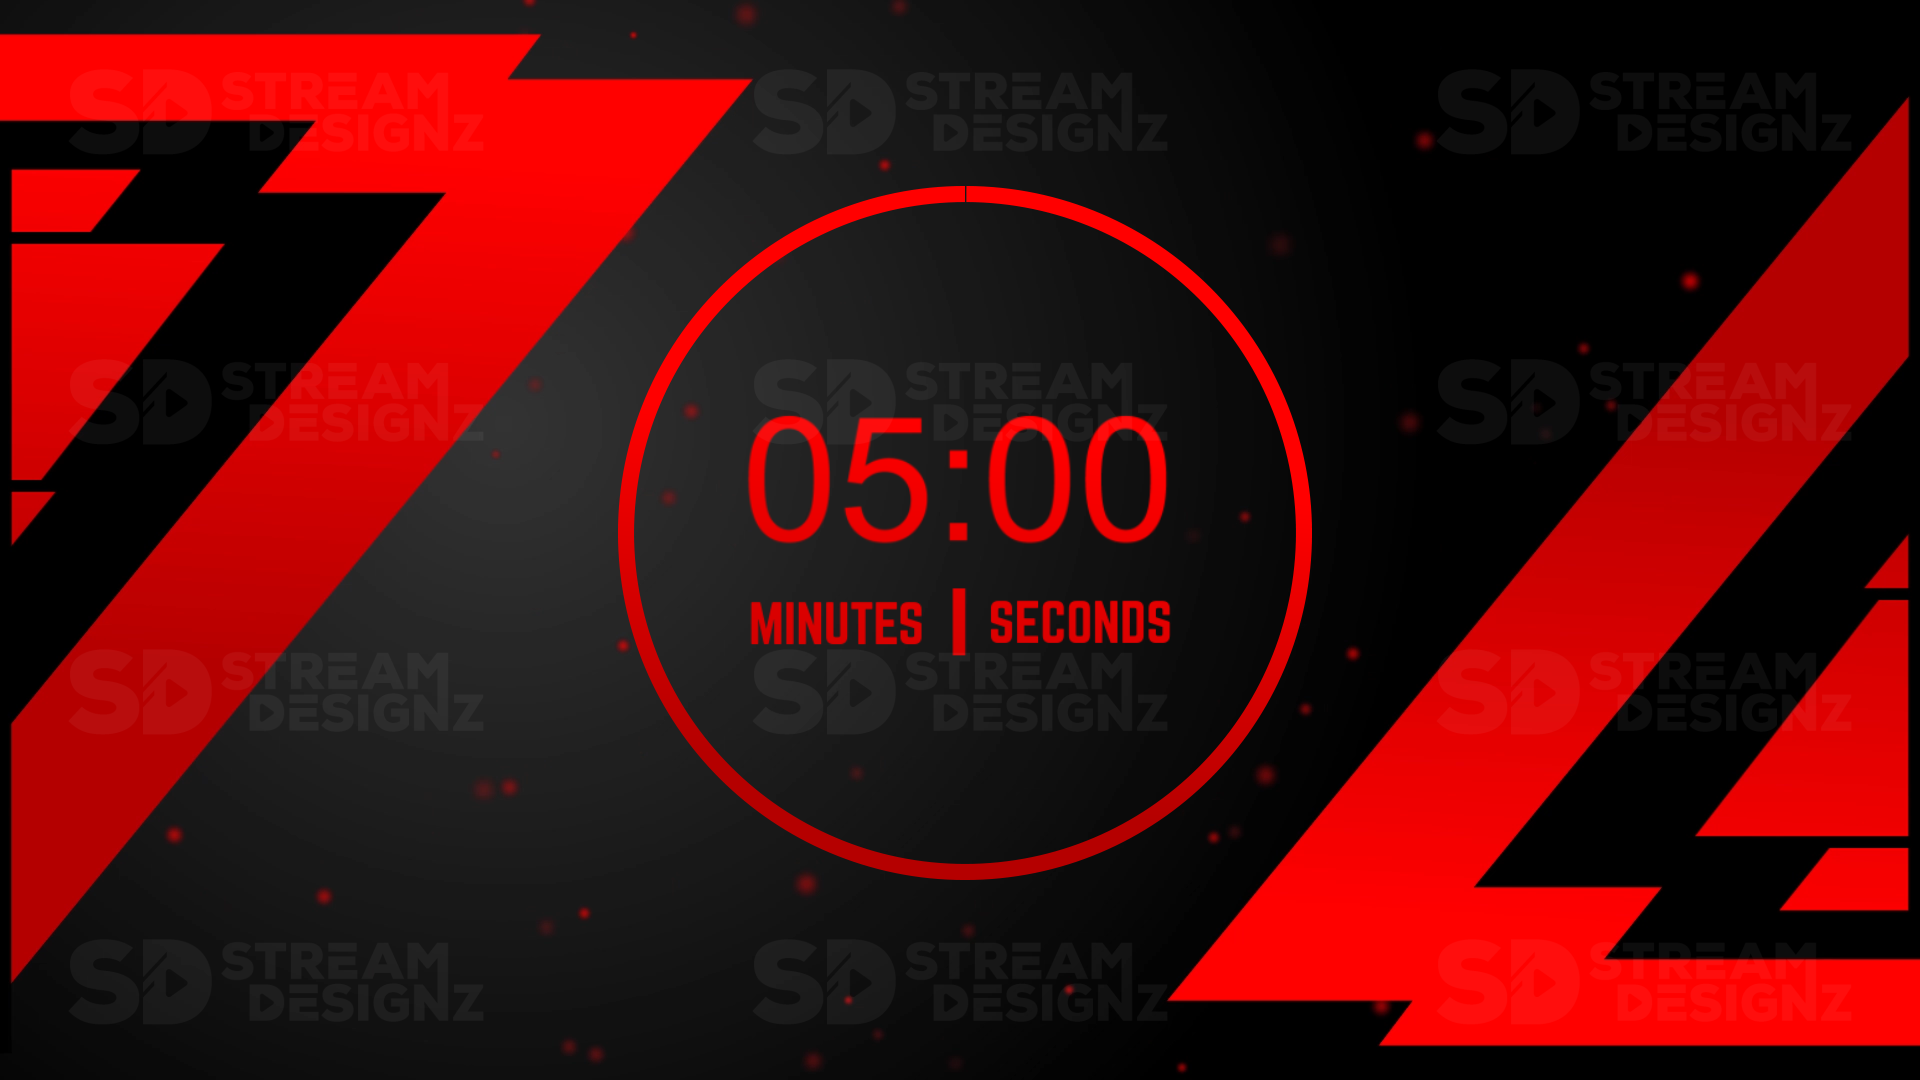 5 minute countdown timer preview video thumbnail stream designz